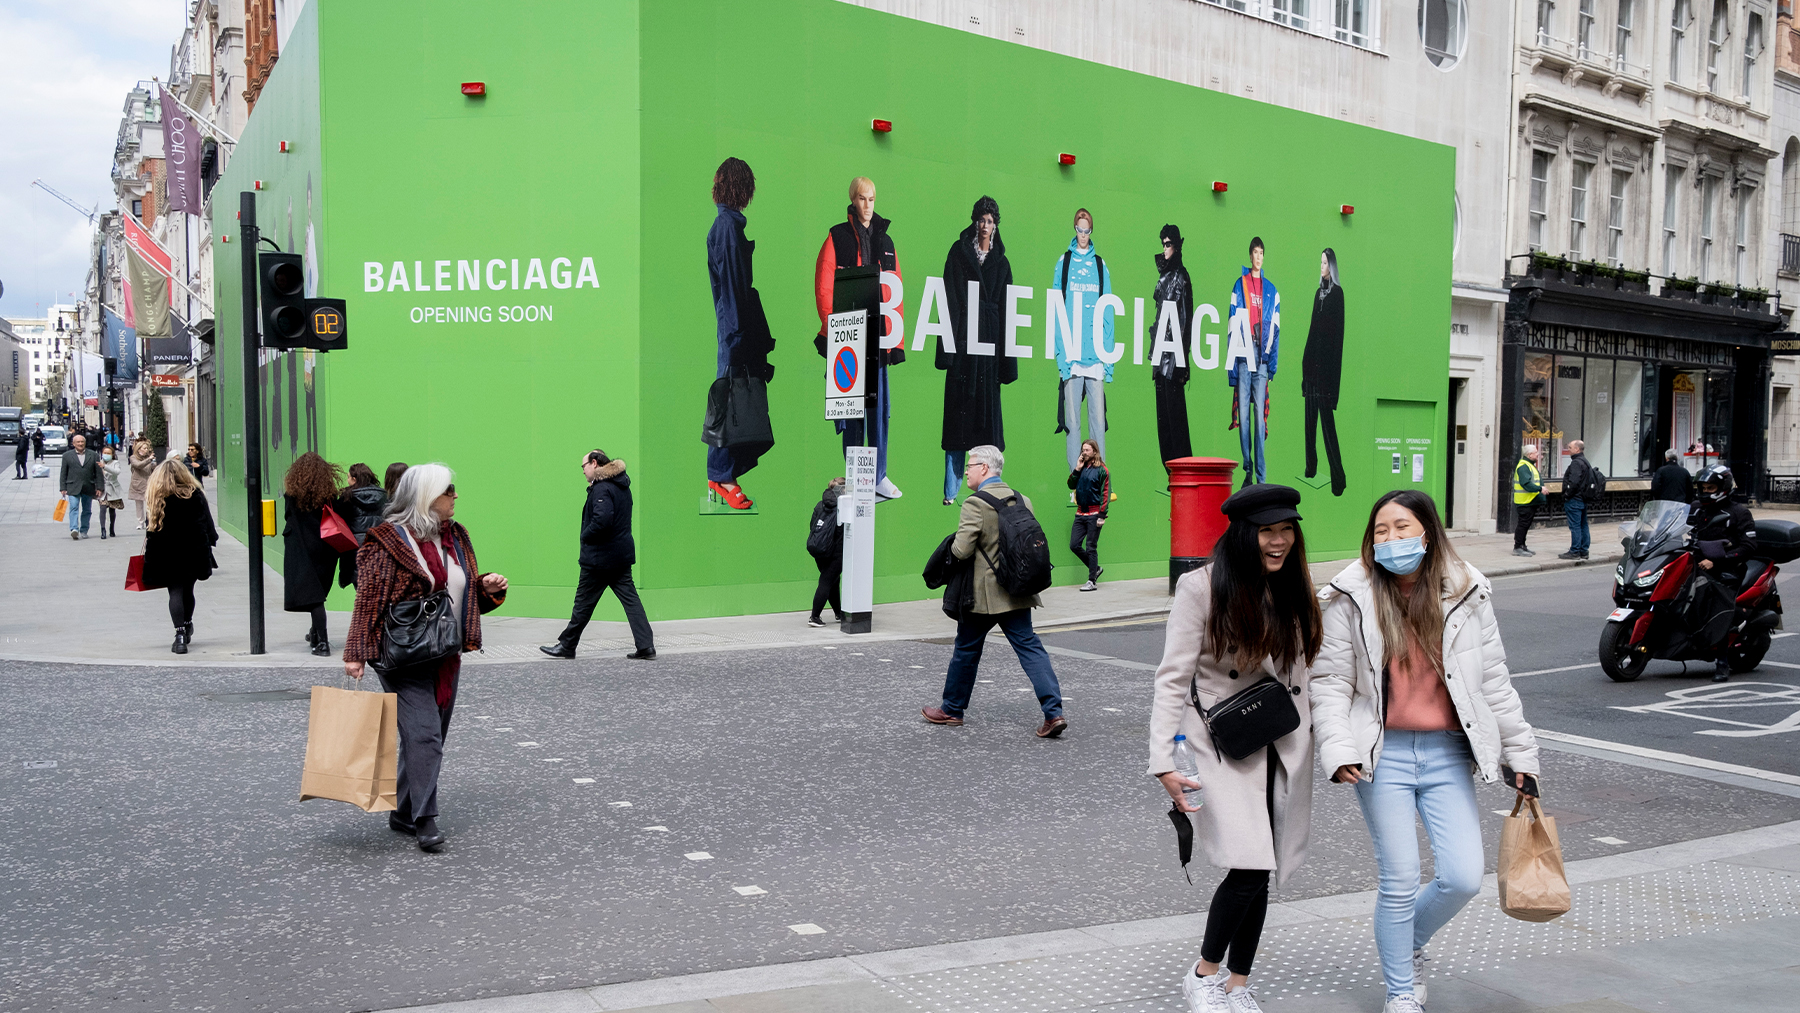 Marketing Of Balenciaga by Arul Adarkar on Prezi Next